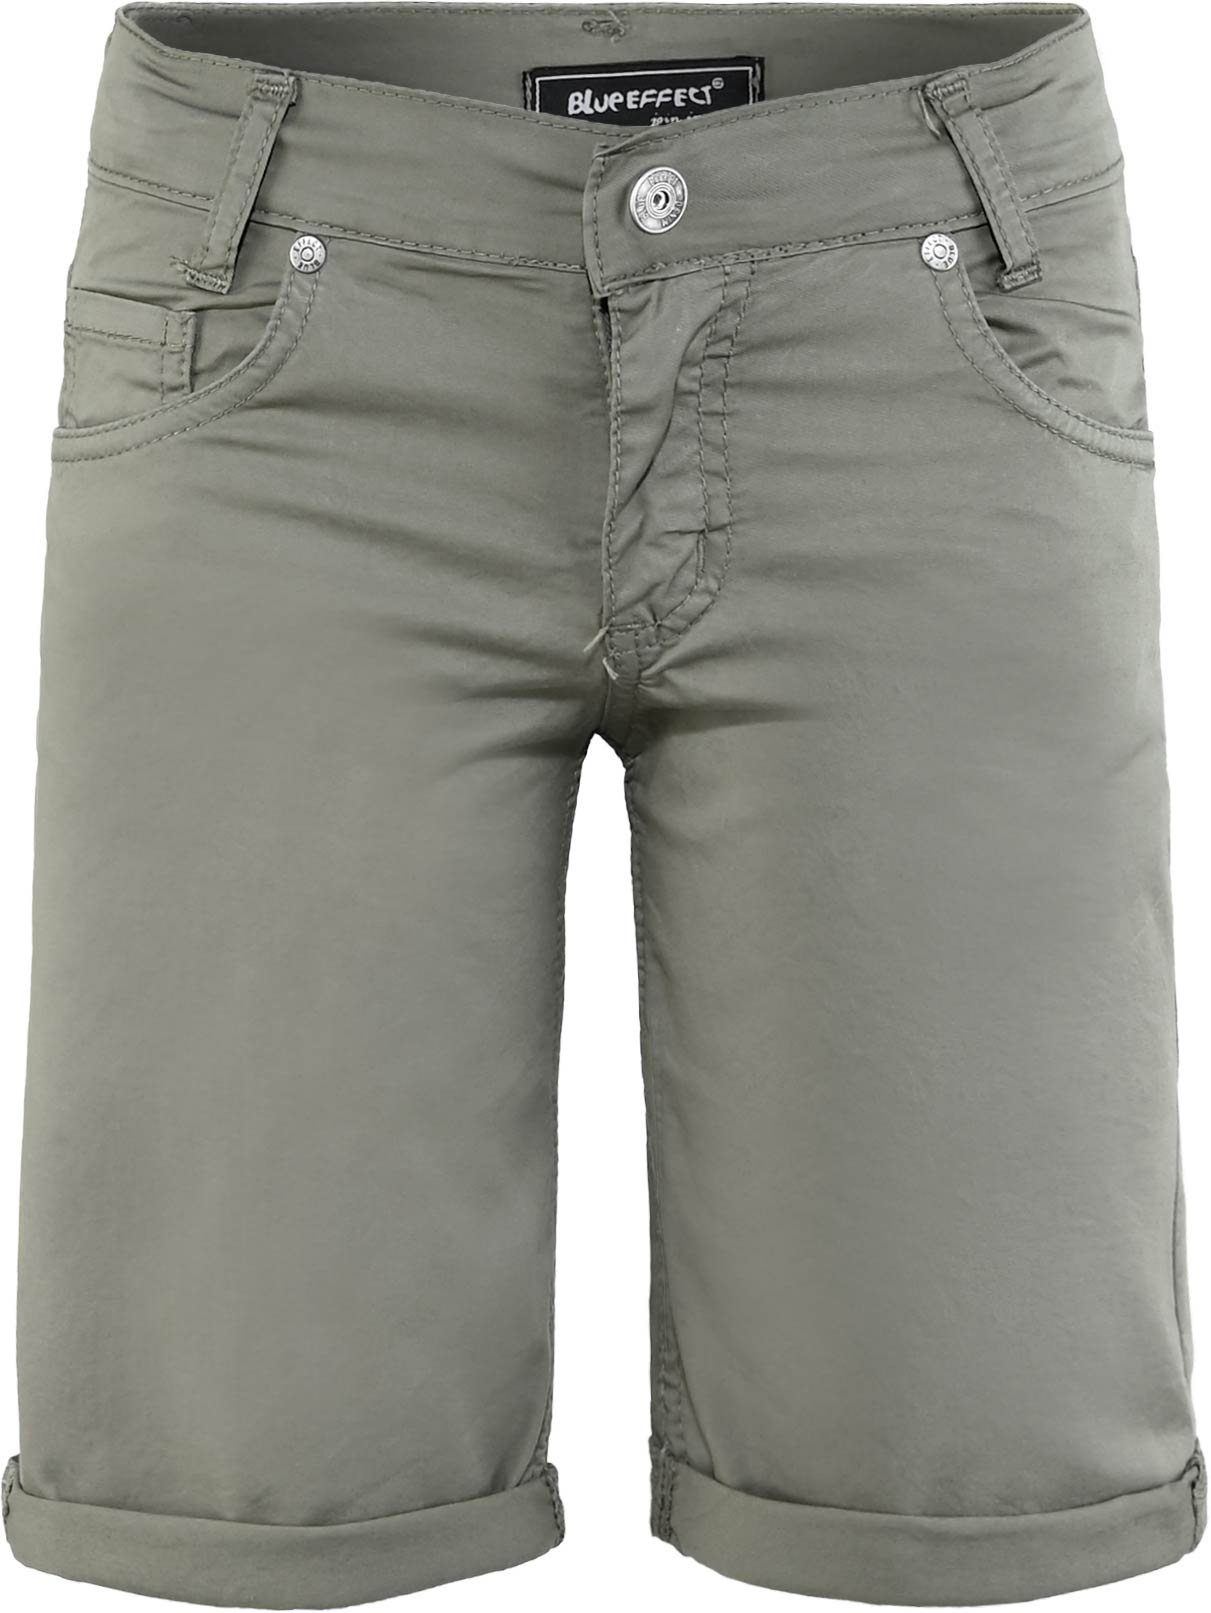 Plus BLUE EFFECT fit - wide Shorts Größe schilfgrün